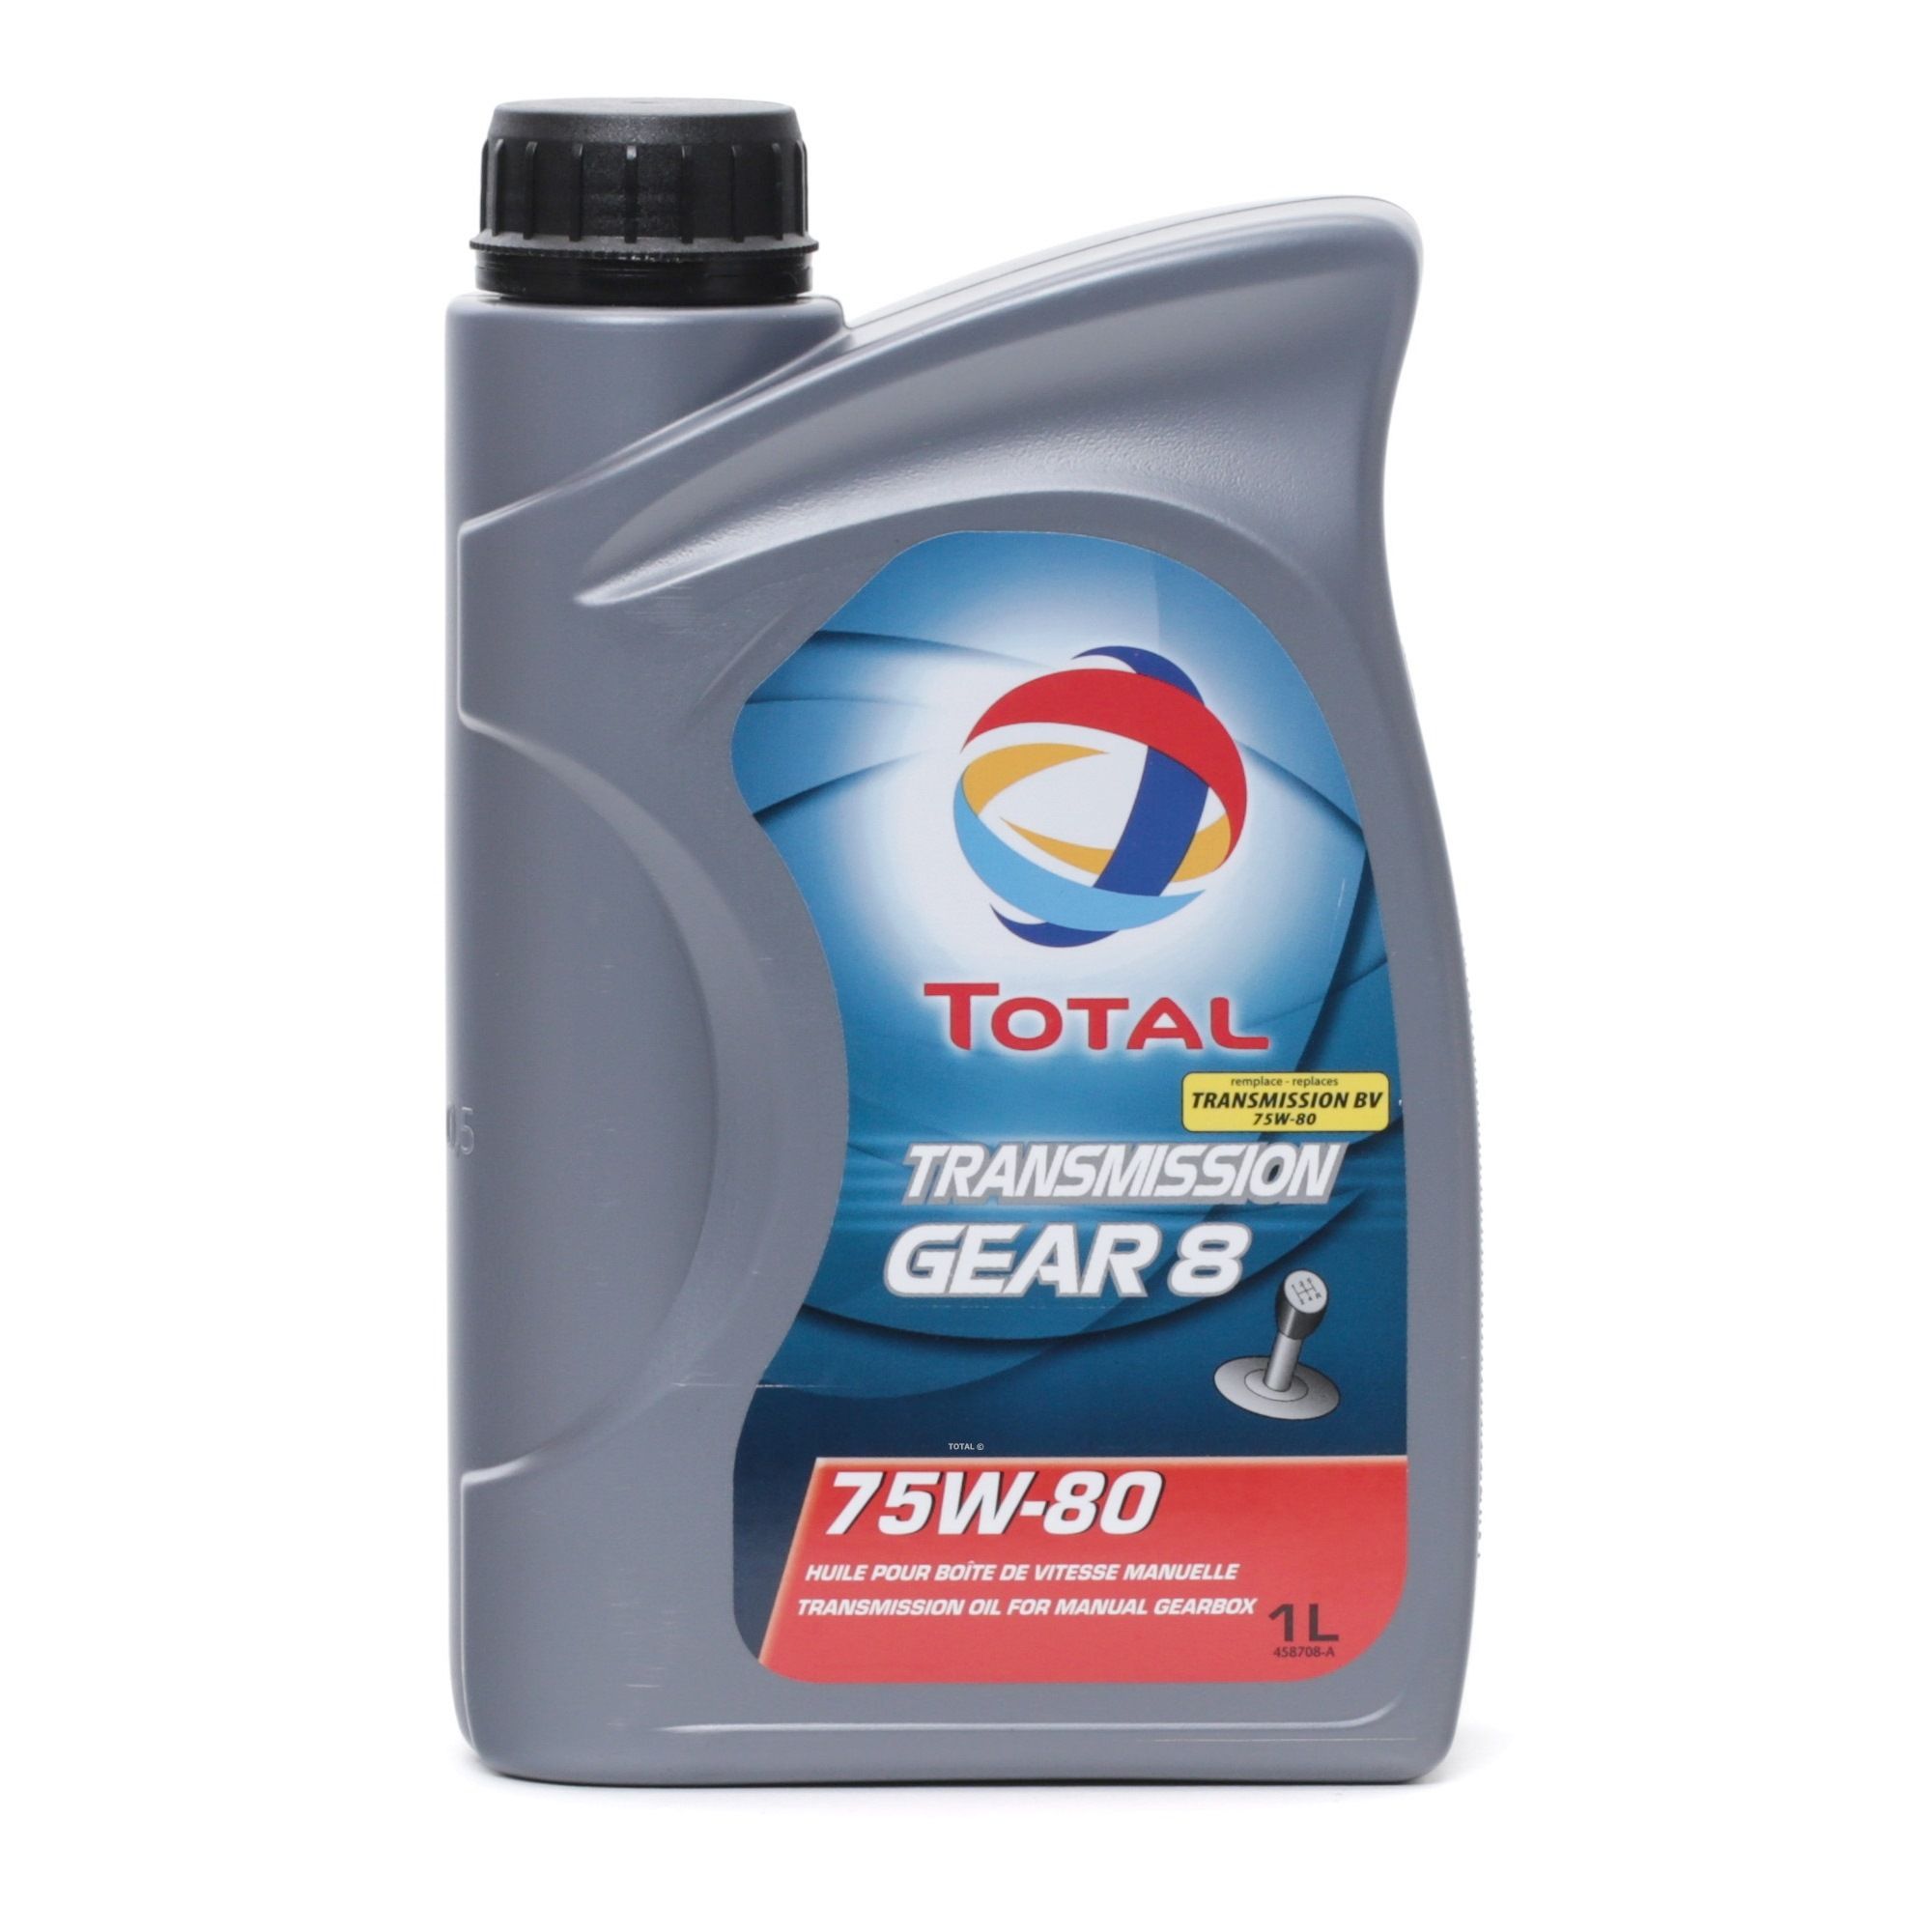 Fiat Oliën & vloeistoffen onderdelen - Versnellingsbakolie TOTAL 2201278